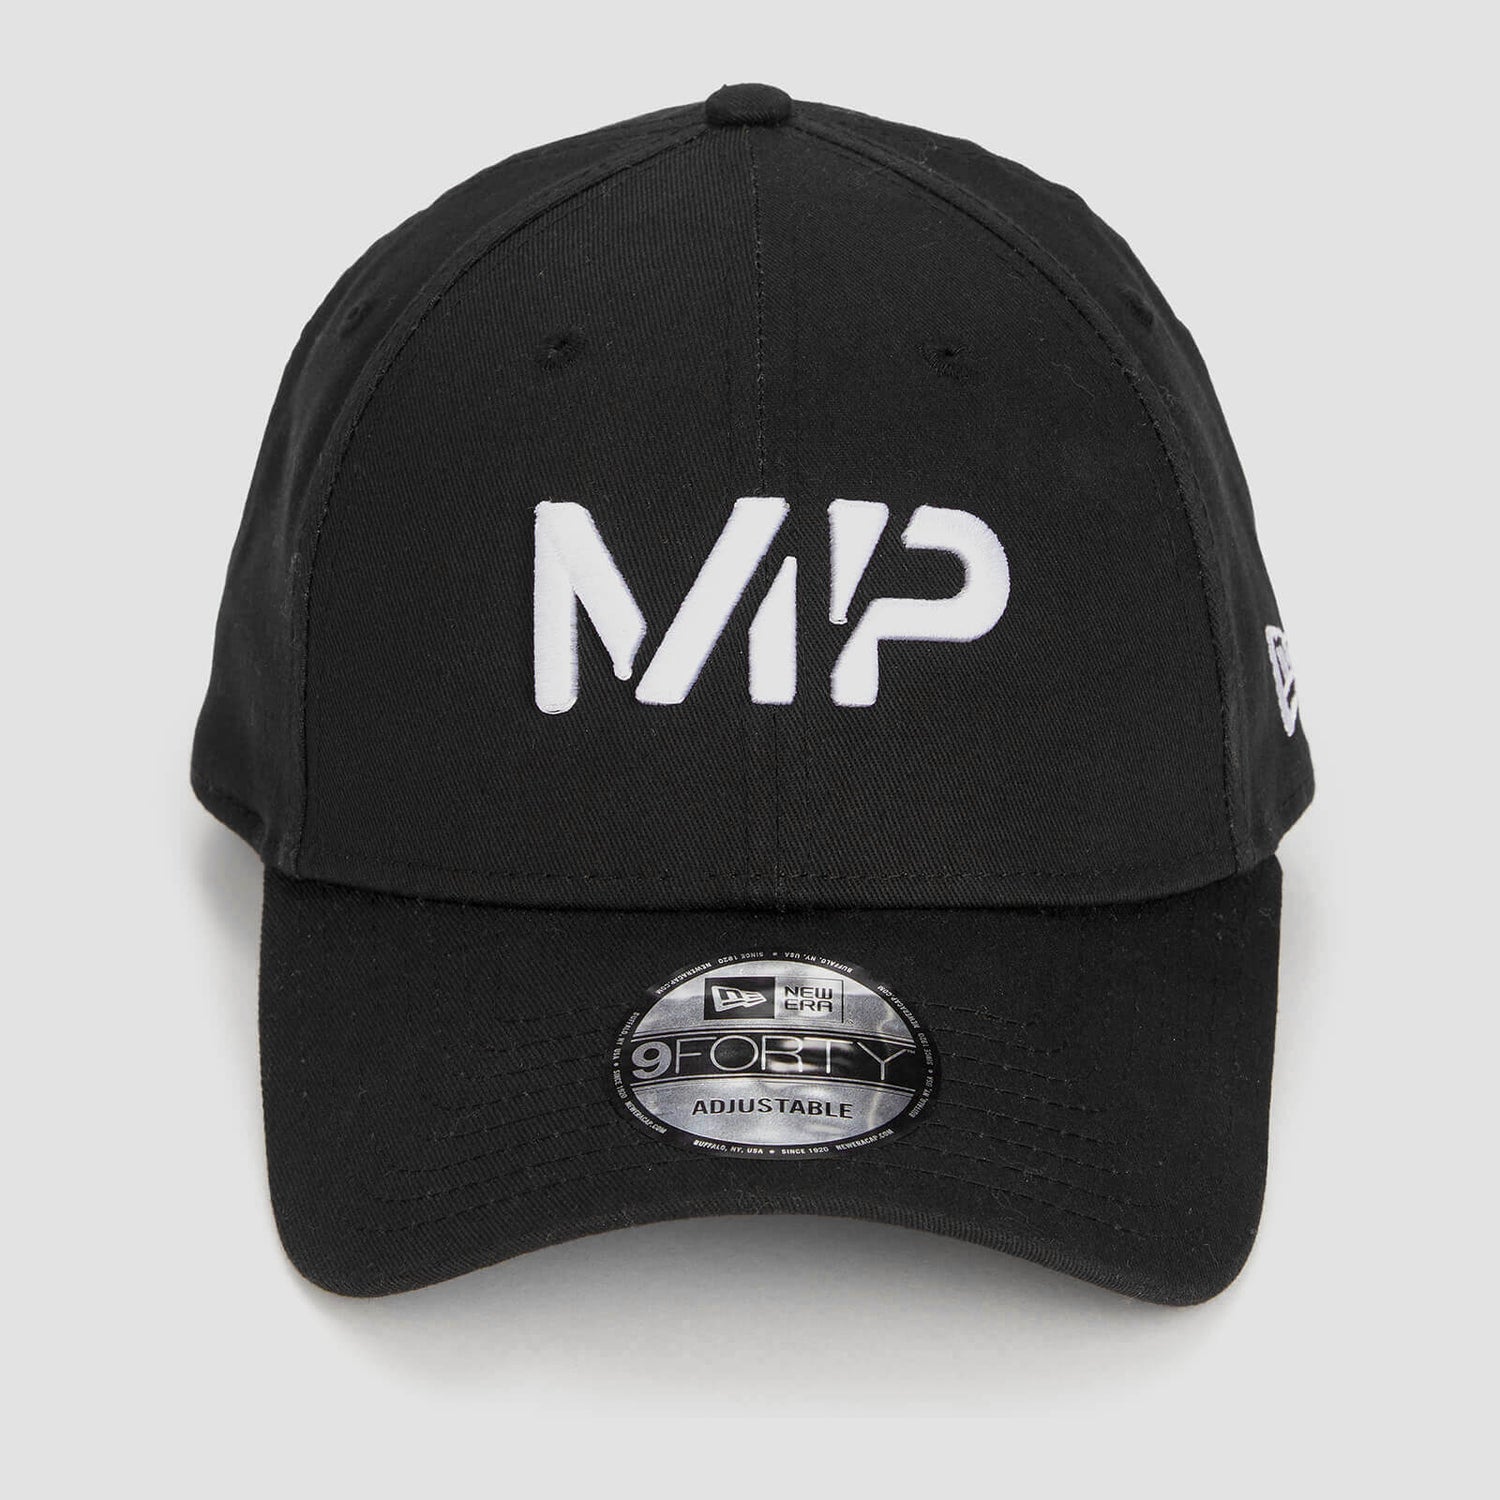 MP NEW ERA 9FORTY Baseball Cap - Sort/hvid